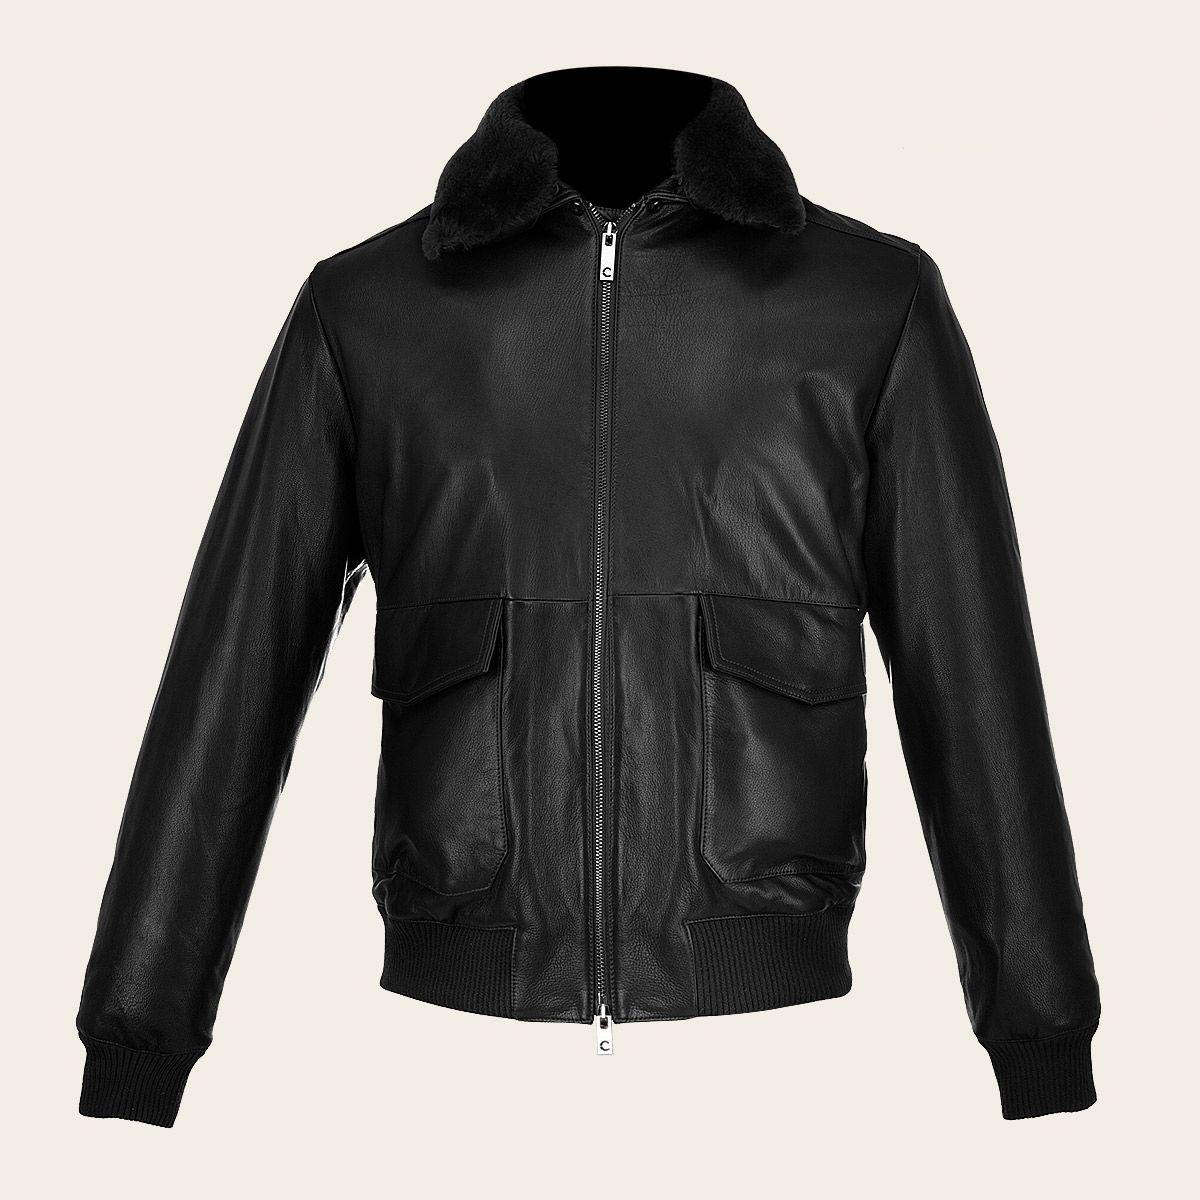 HCHI008 - Cuadra black dress casual fashion aviator leather jacket for men-Kuet.us